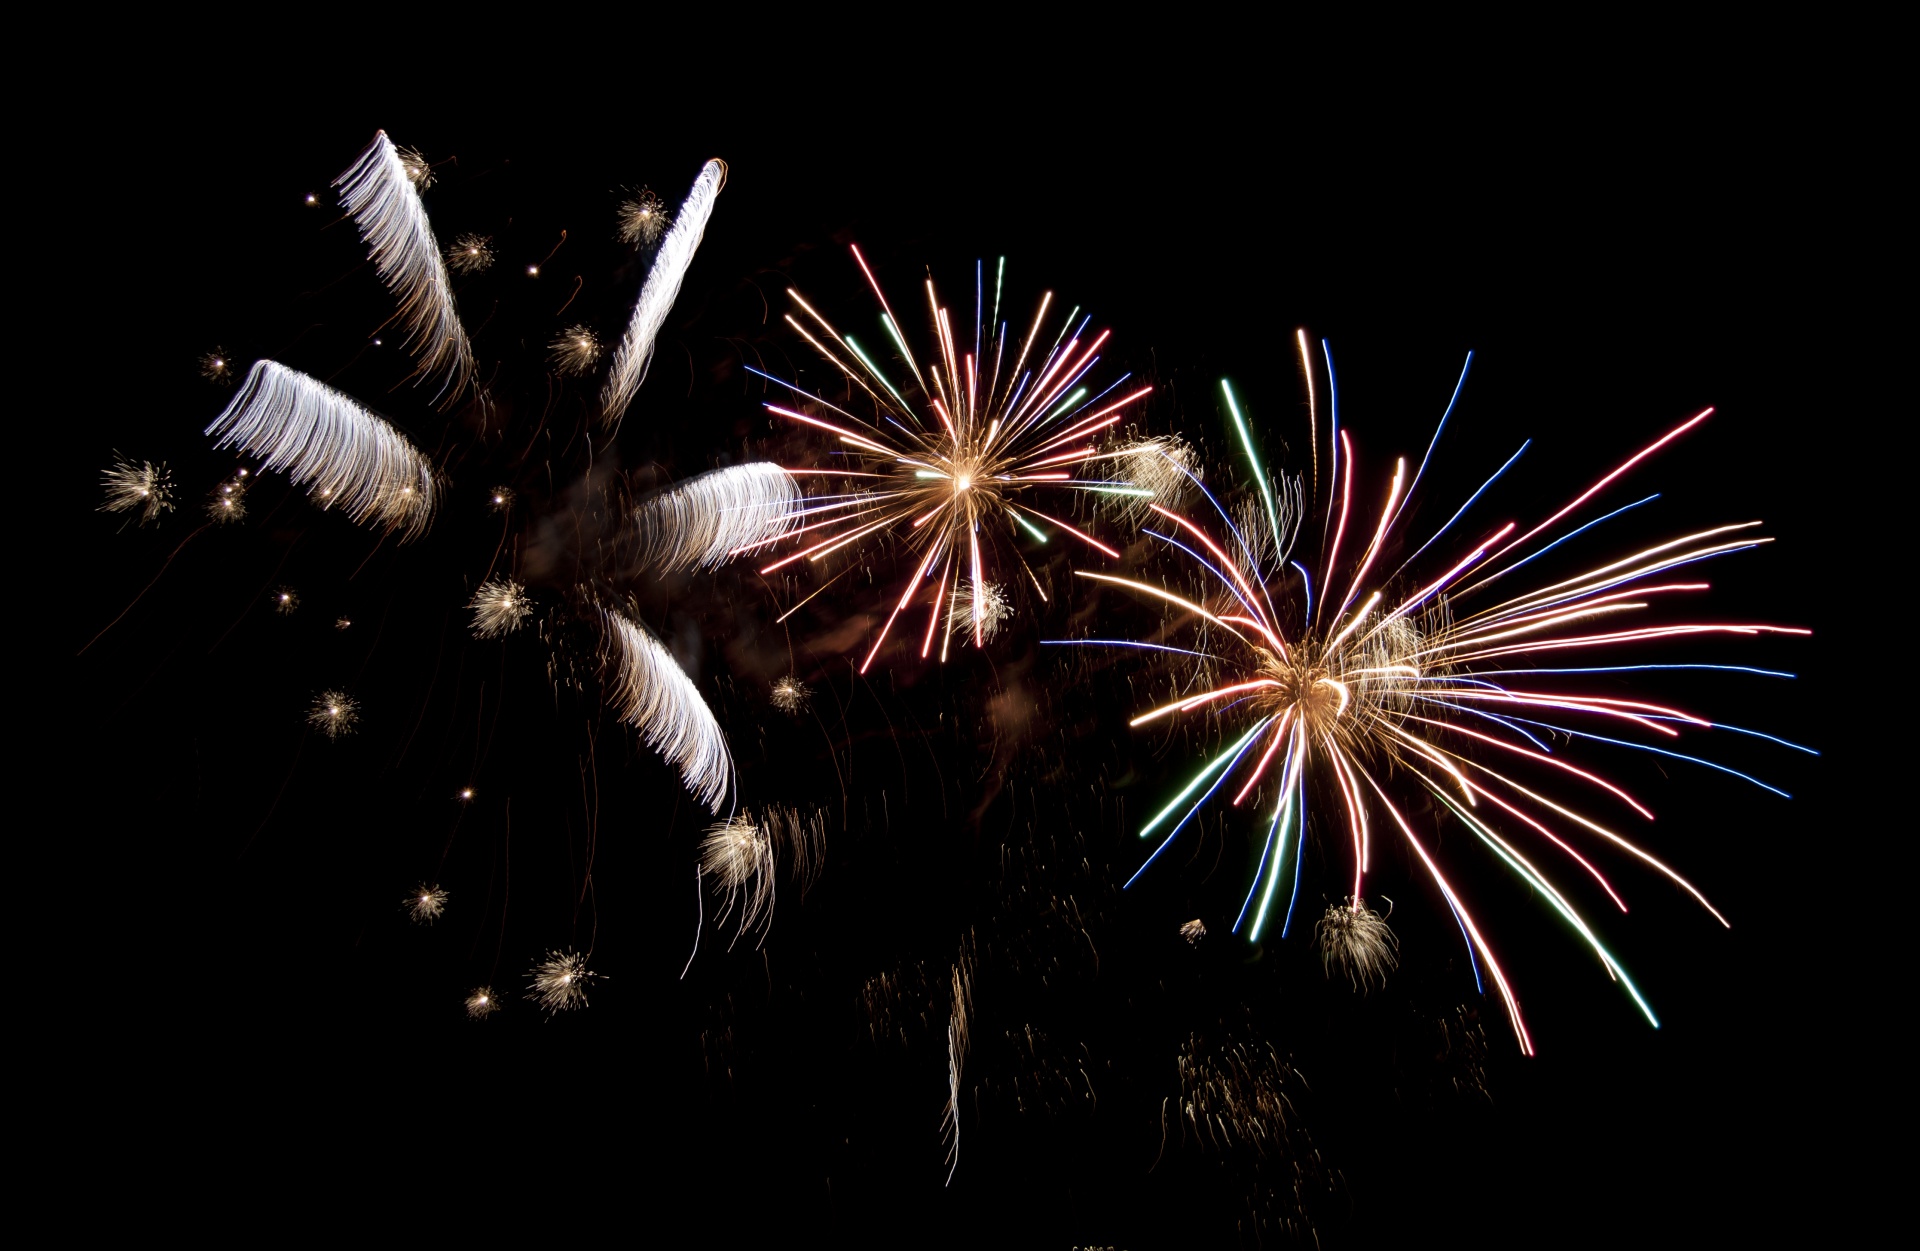 norwich university fireworks england free photo